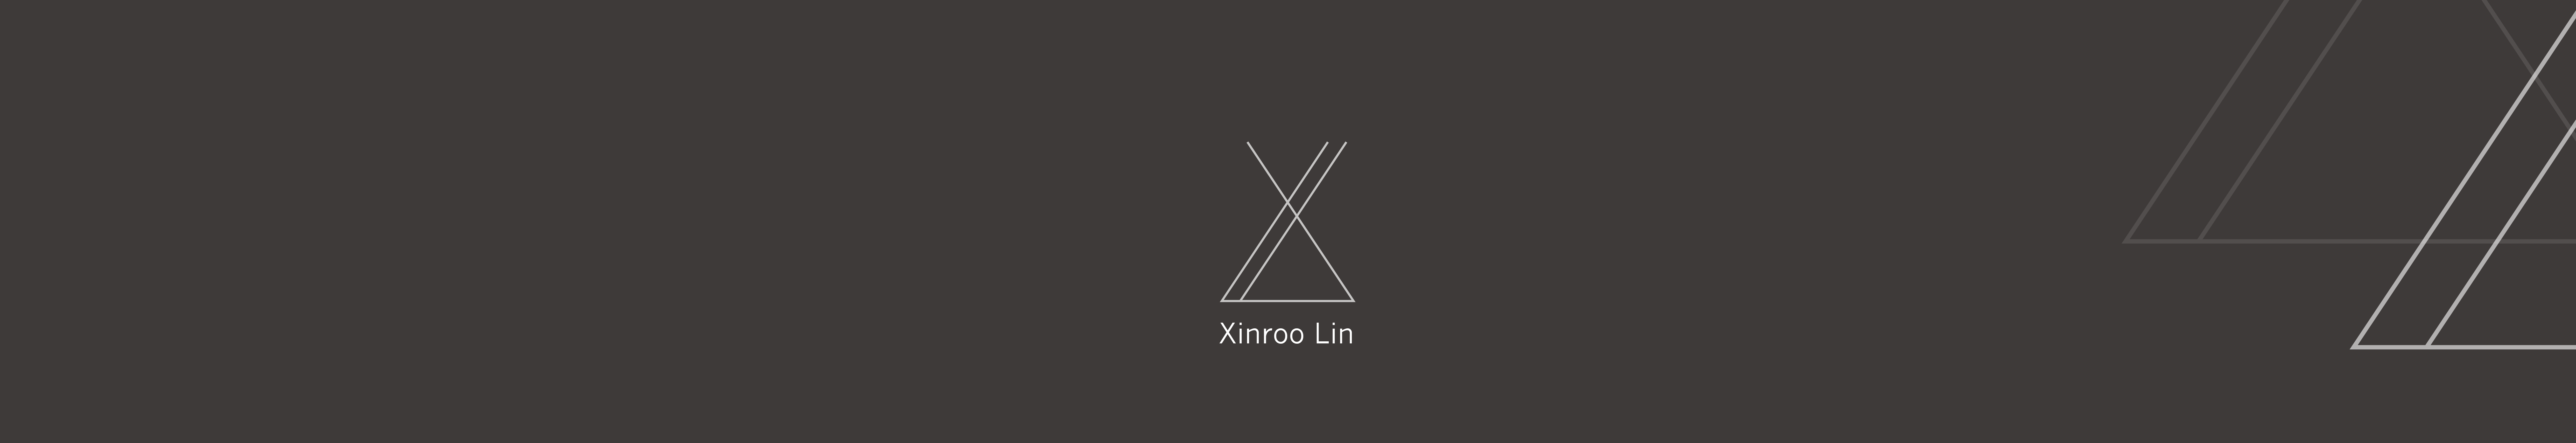 Xinroo Lin's profile banner